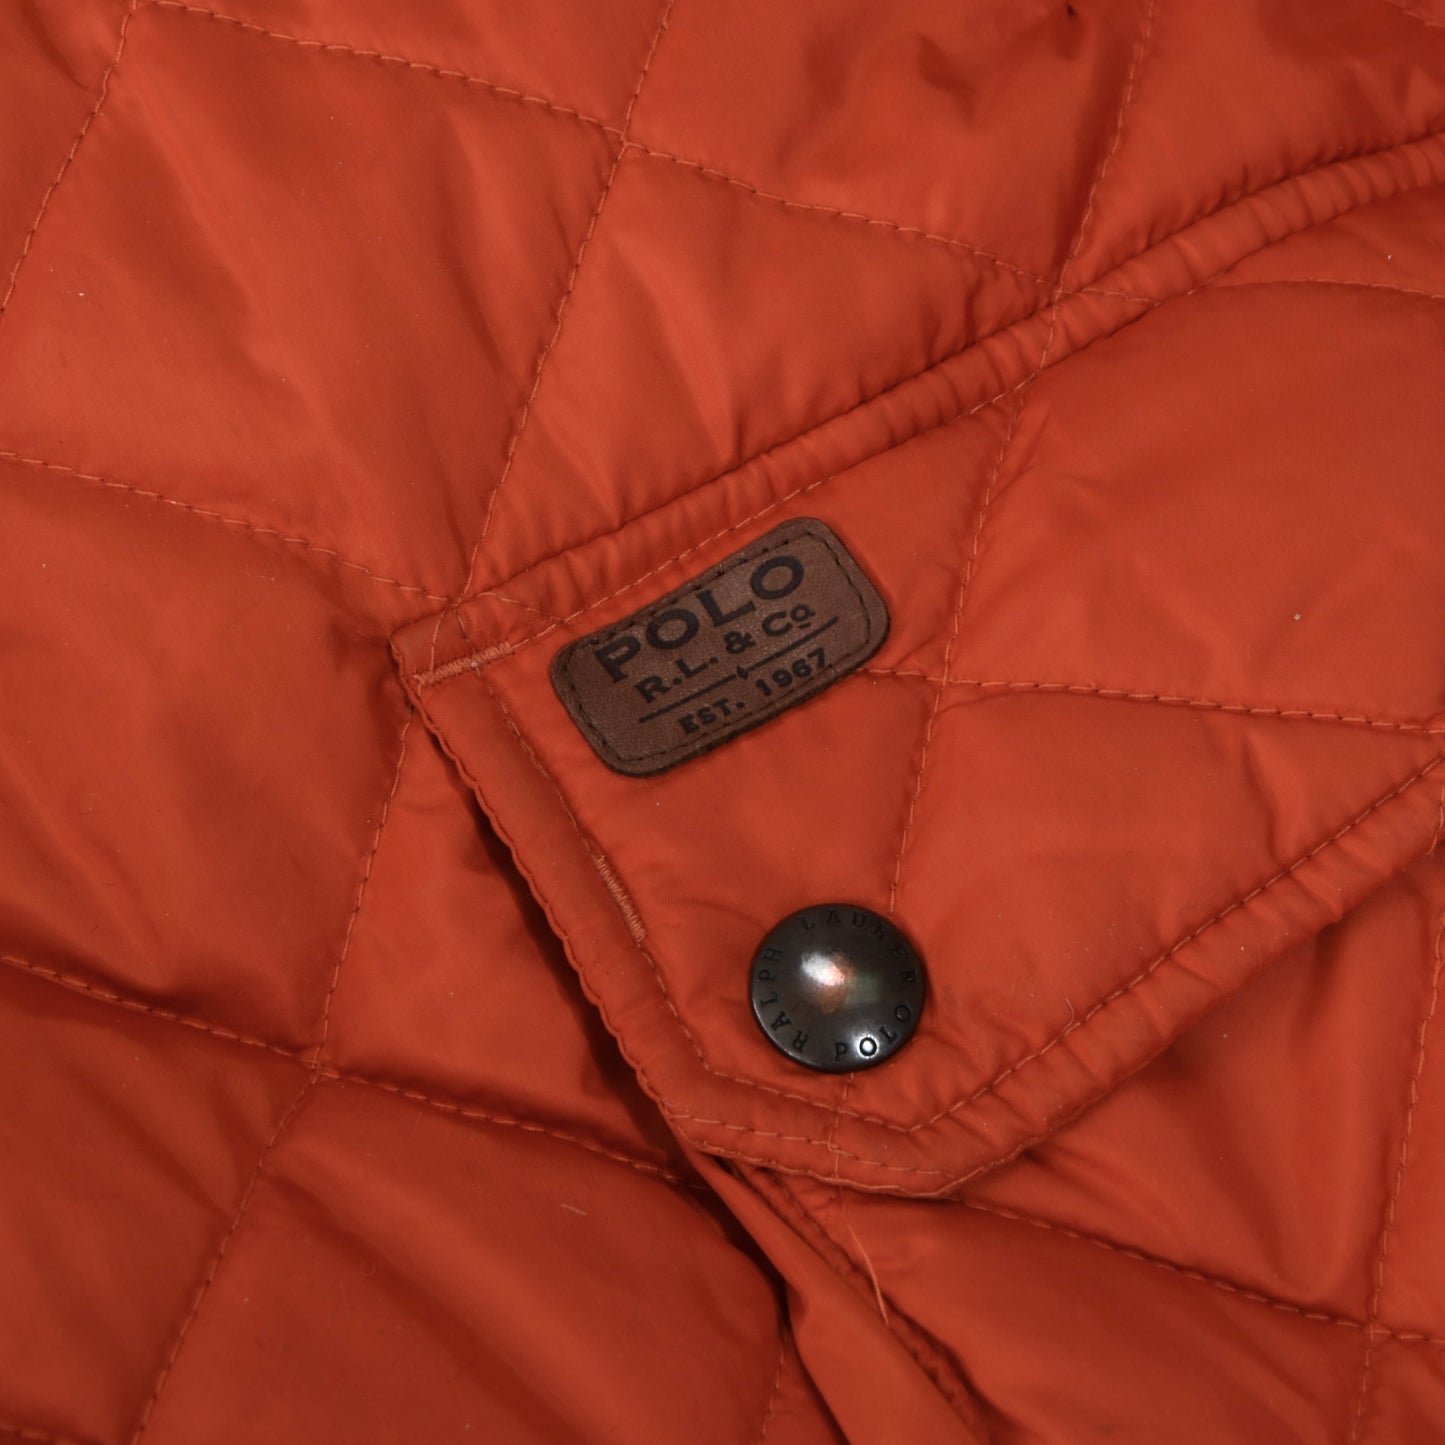 Polo Ralph Lauren Quilted Jacket Size L - Orange